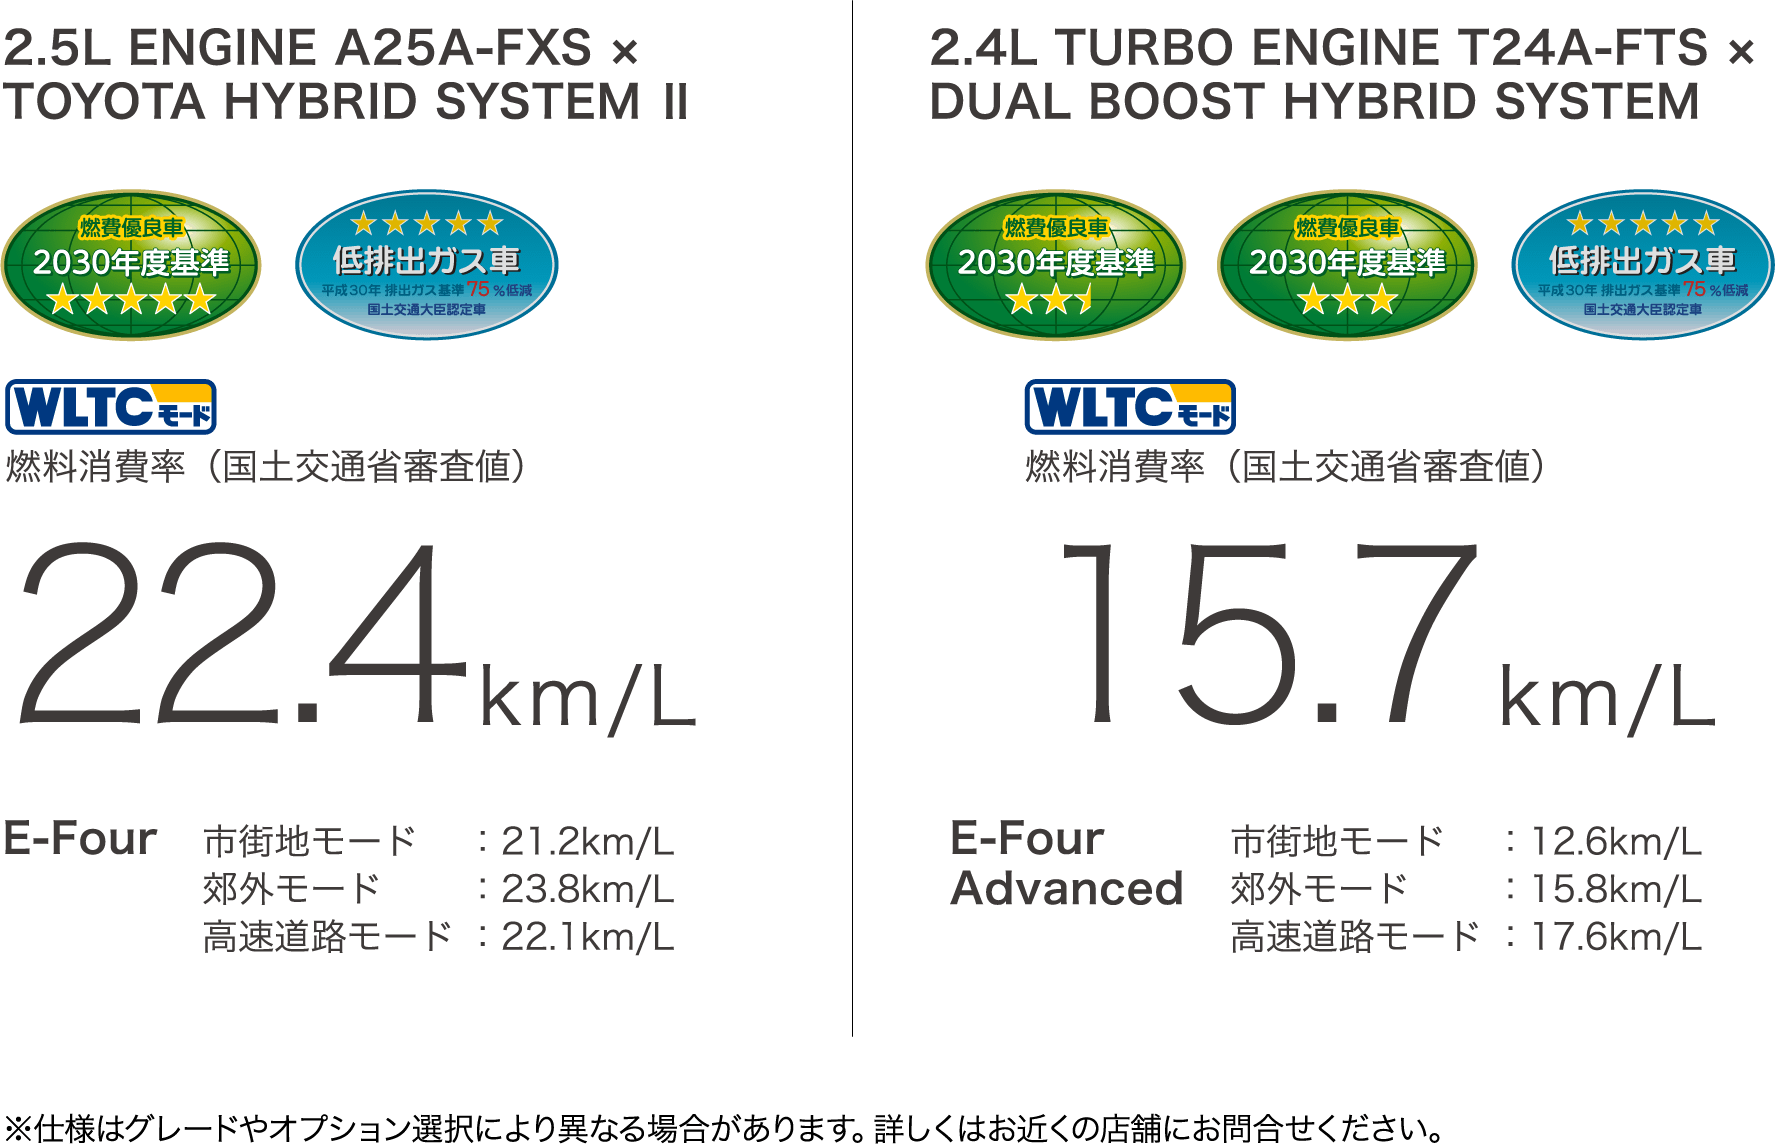 2.5L ENGINE A25A-FXS × TOYOTA HYBRID SYSTEM Ⅱ 燃料消費率（国土交通省審査値）22.4km/L／2.4L TURBO ENGINE T24A-FTS × DUAL BOOST HYBRID SYSTEM 燃料消費率（国土交通省審査値）15.7km/L